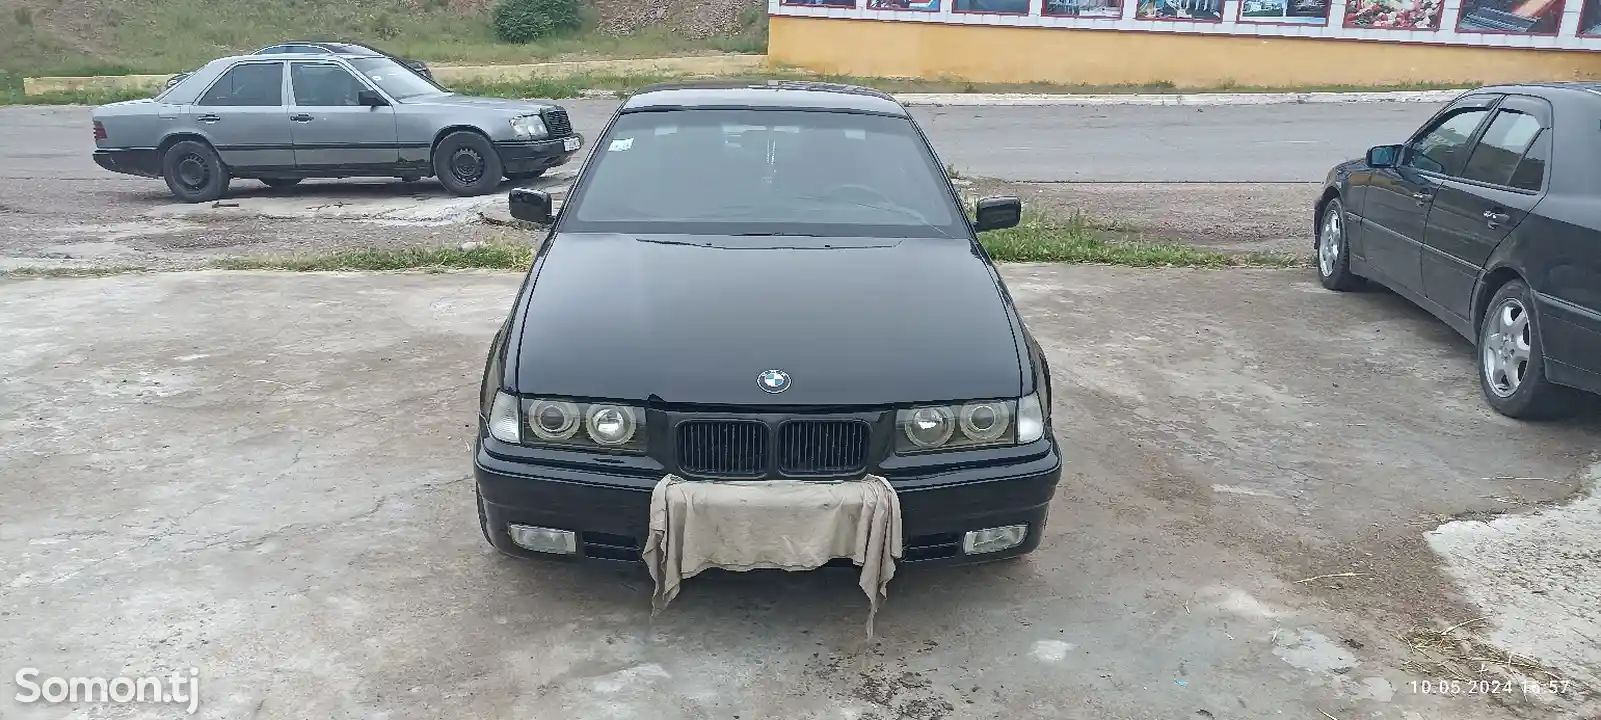 BMW 3 series, 1994-2